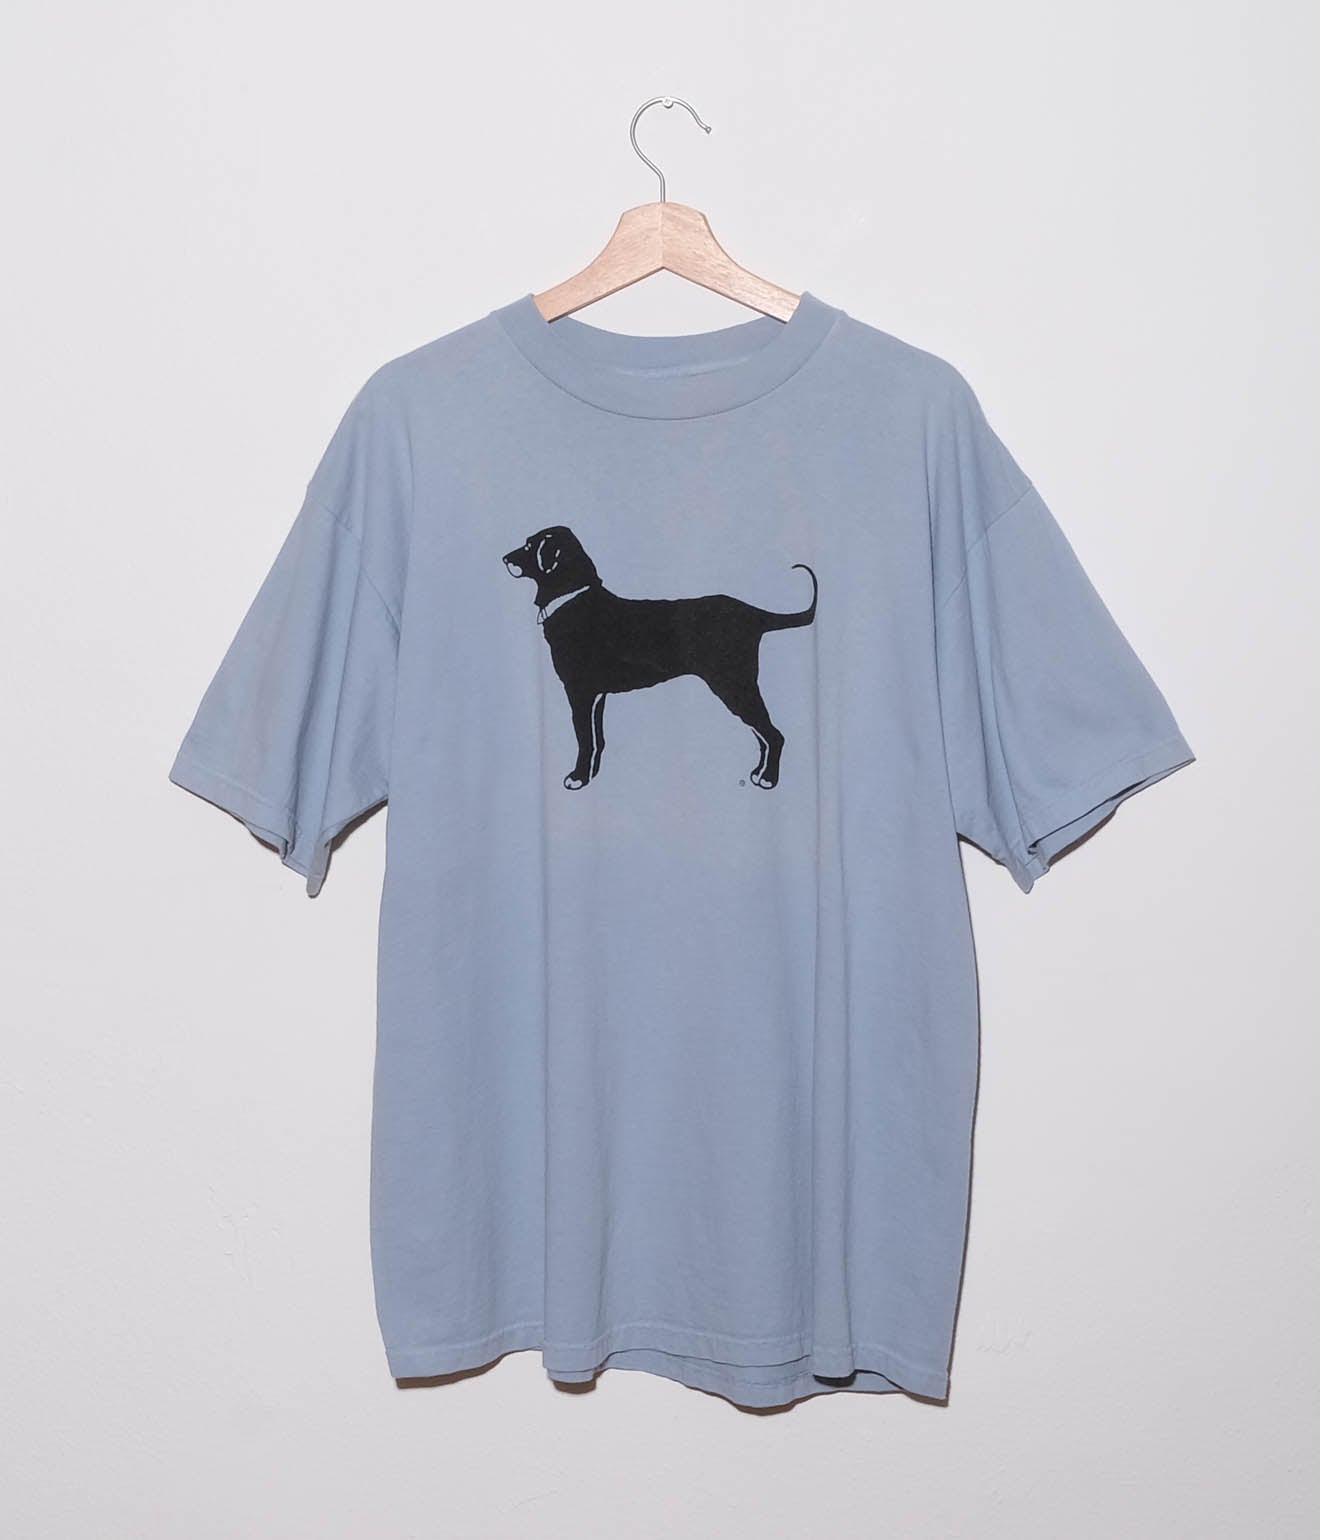 00's The Black Dog Short Sleeve Tee Shirt (Grey)